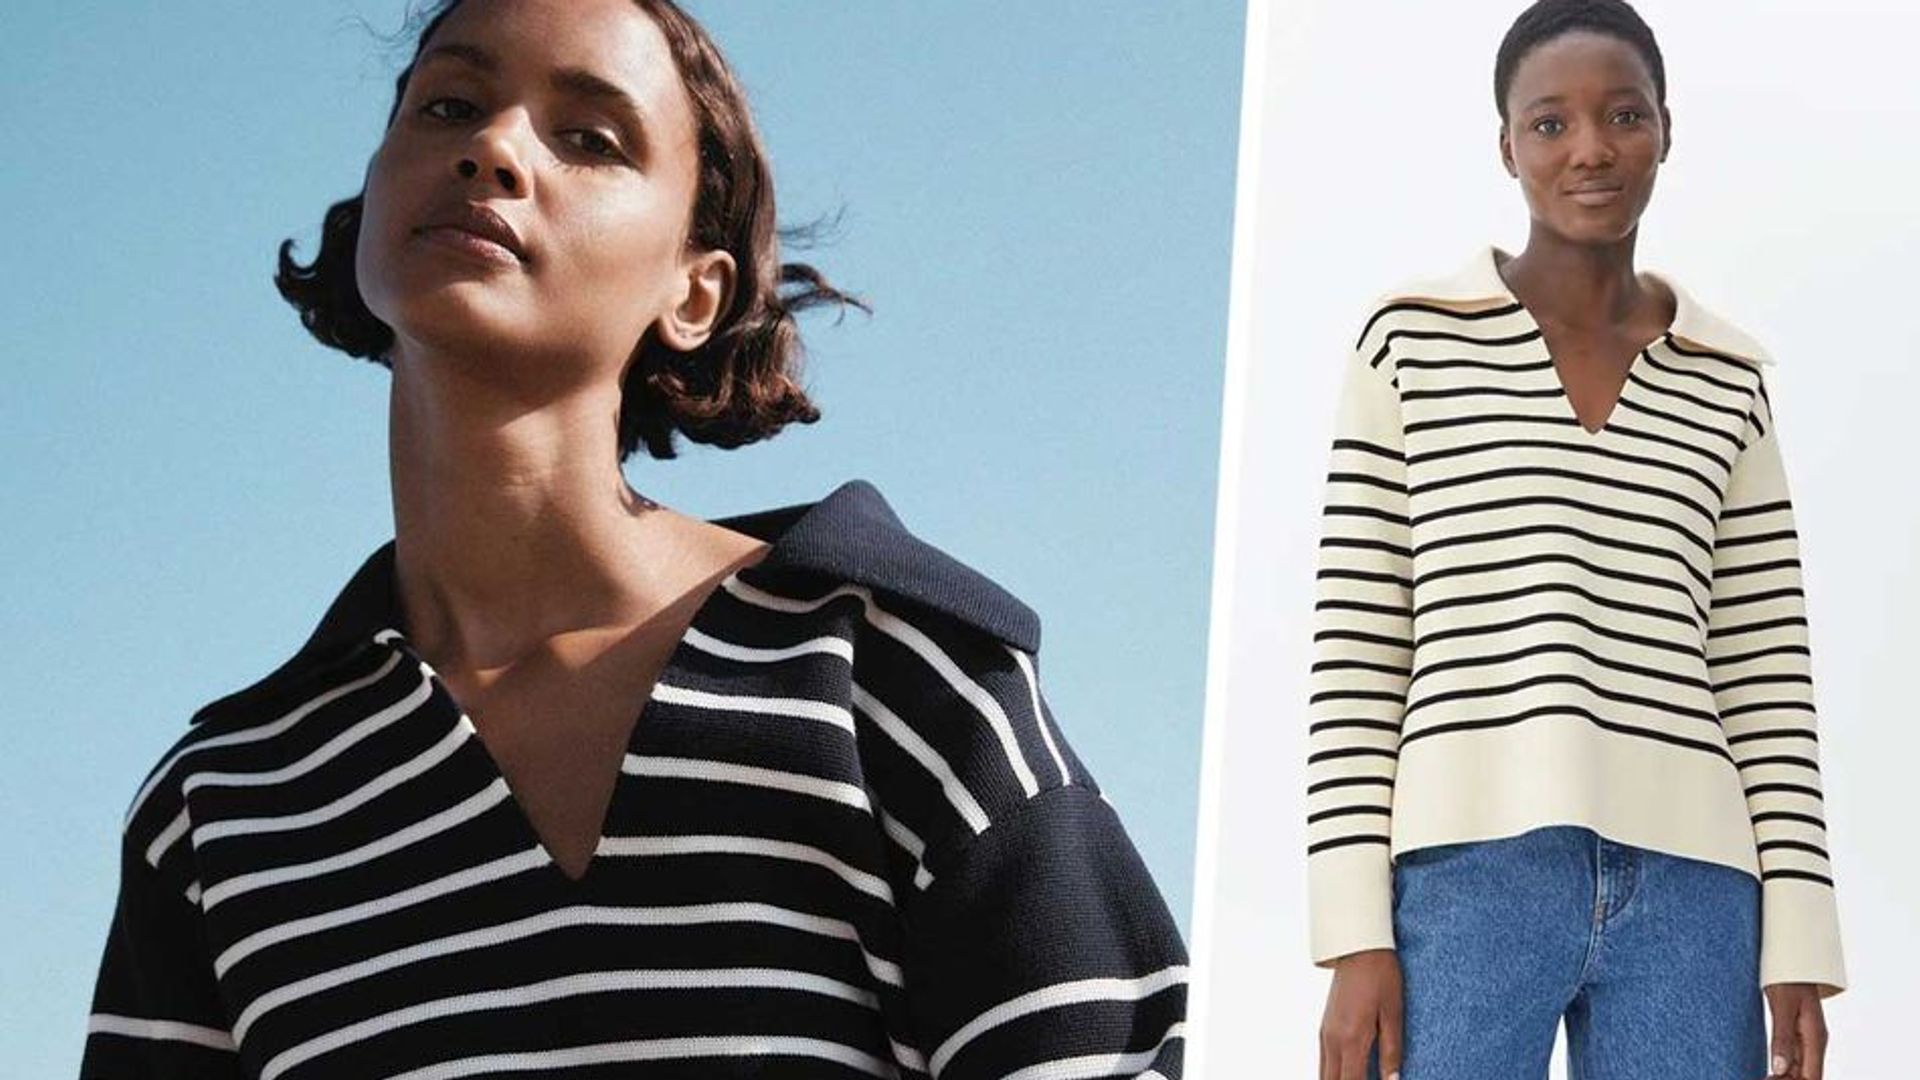 Best Breton jumper: Shop stylish striped jumpers